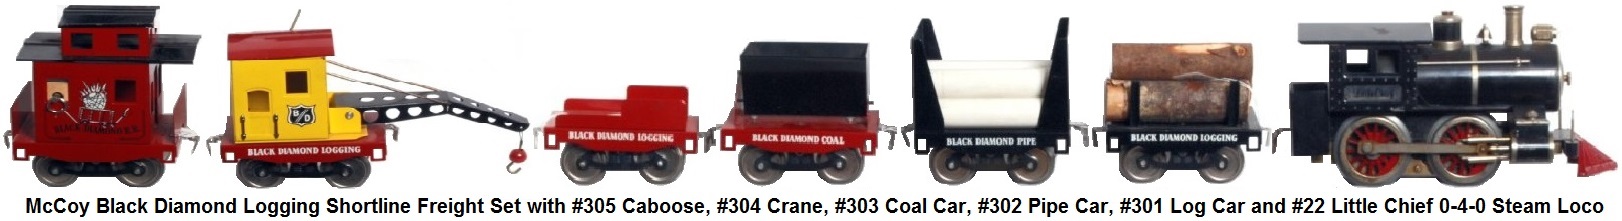 McCoy Black Diamond R.R. Mining train with #22 Little Chief loco